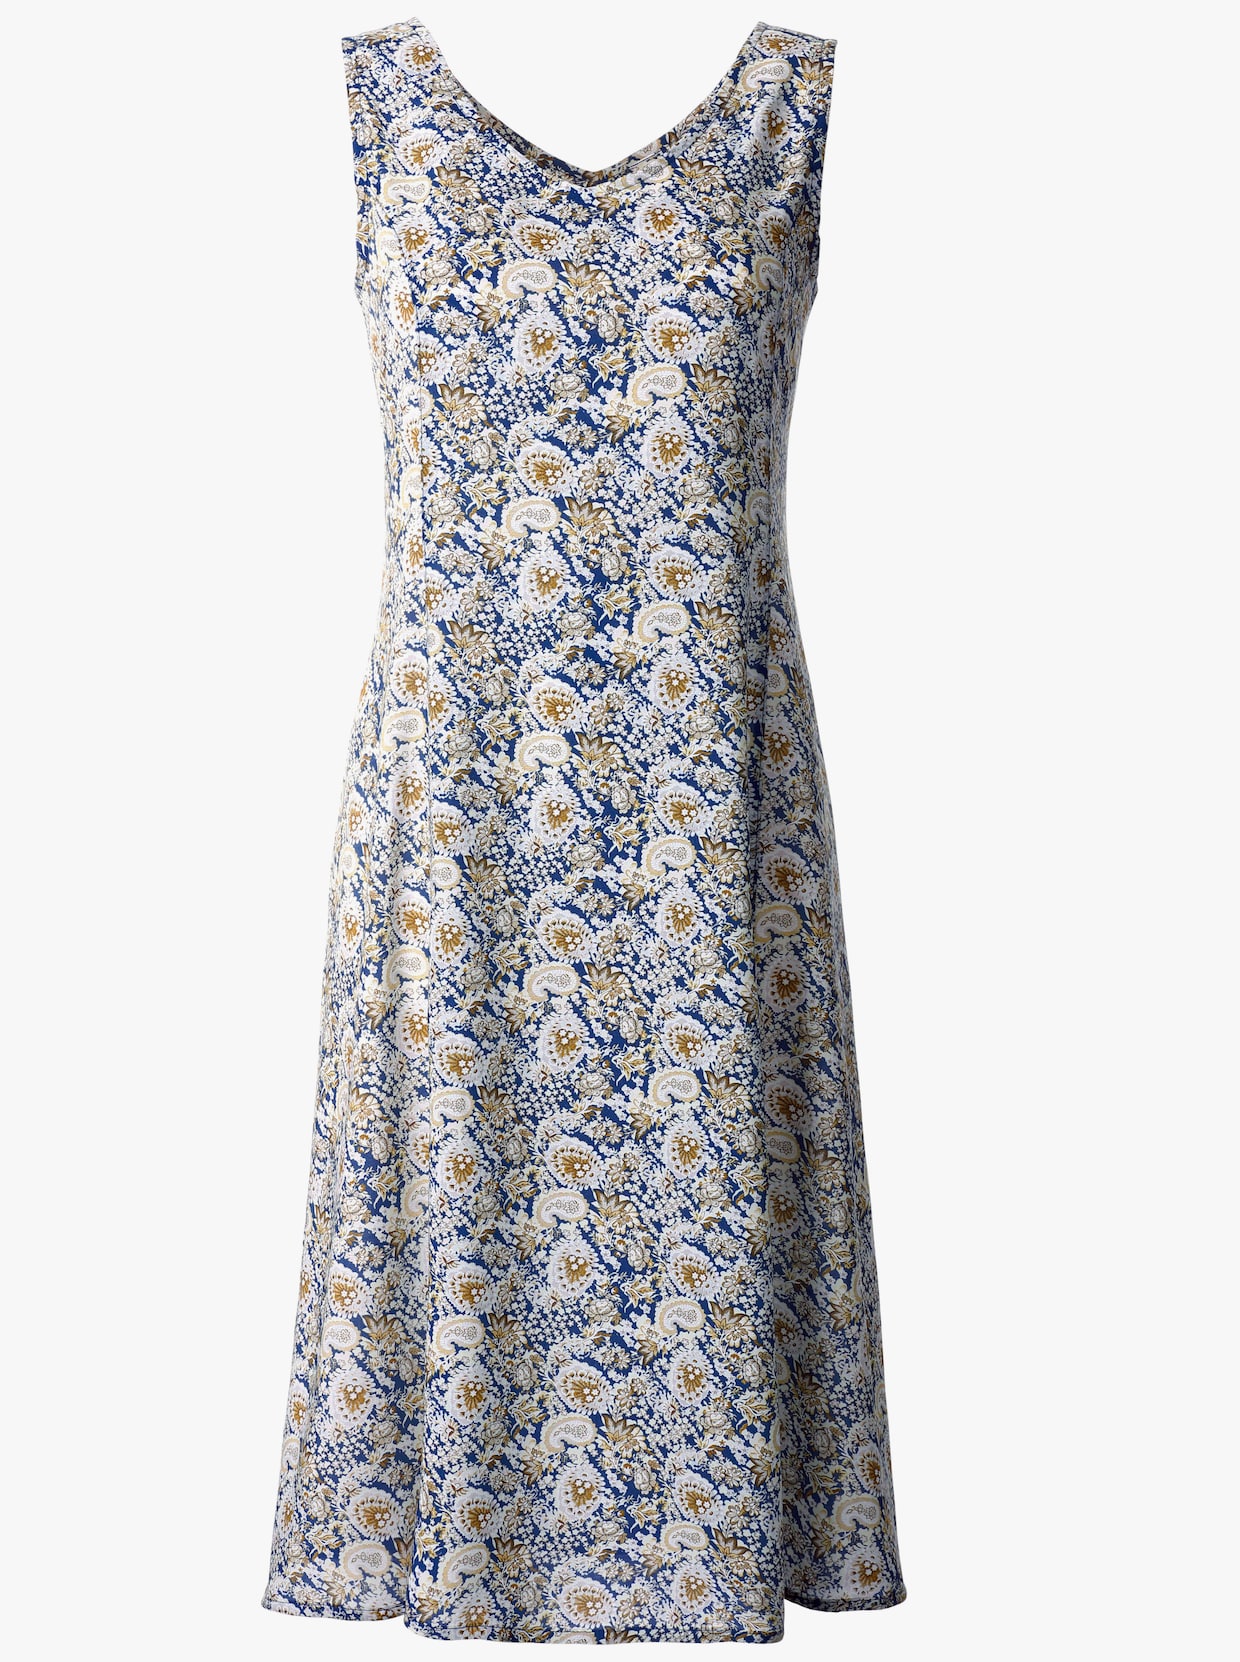 Bedrukte jurk - blauw paisley